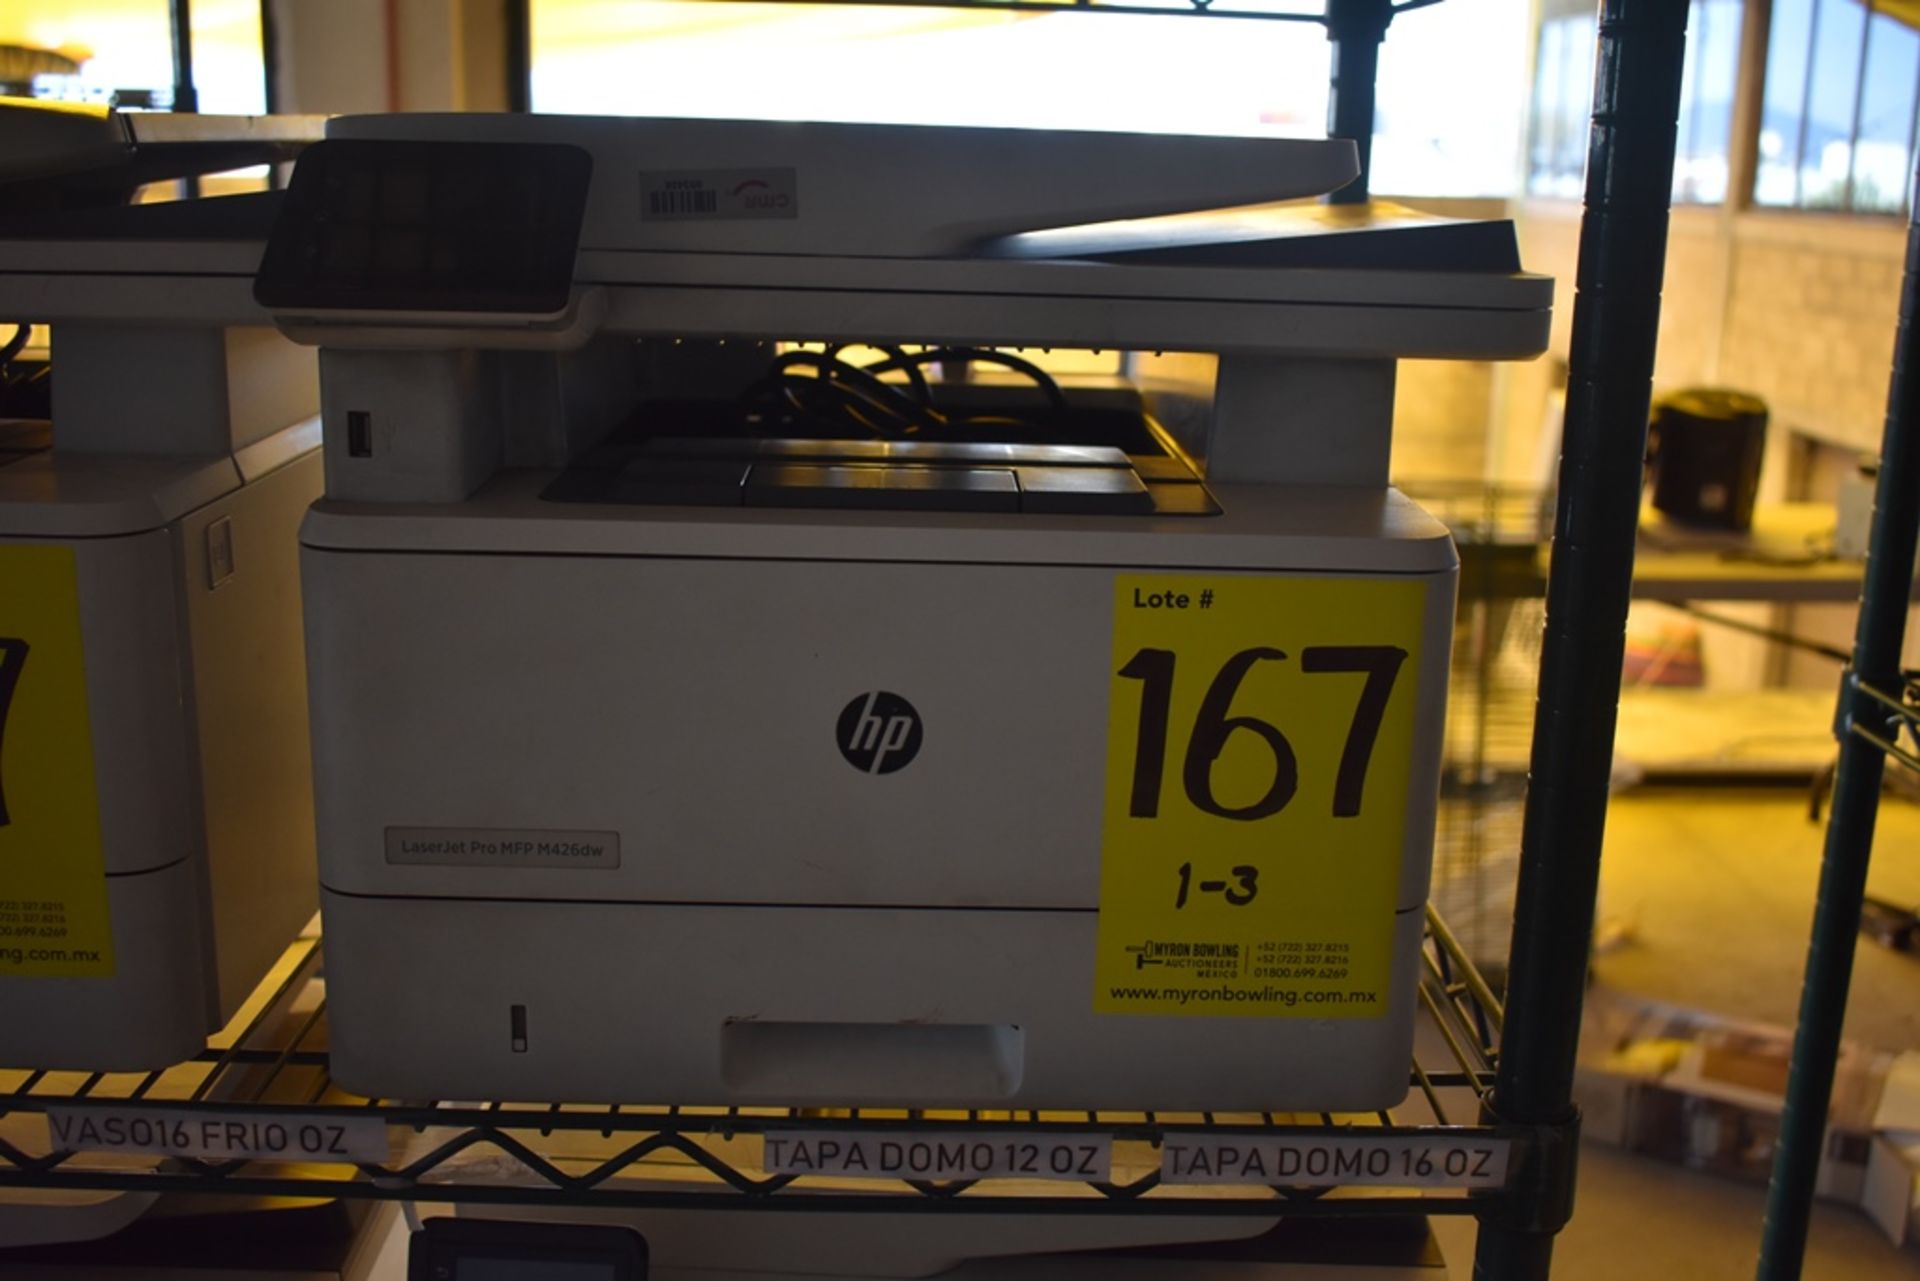 3 impresoras multifuncional marca HP, Modelo: LaserJet Pro MFP M426fdw